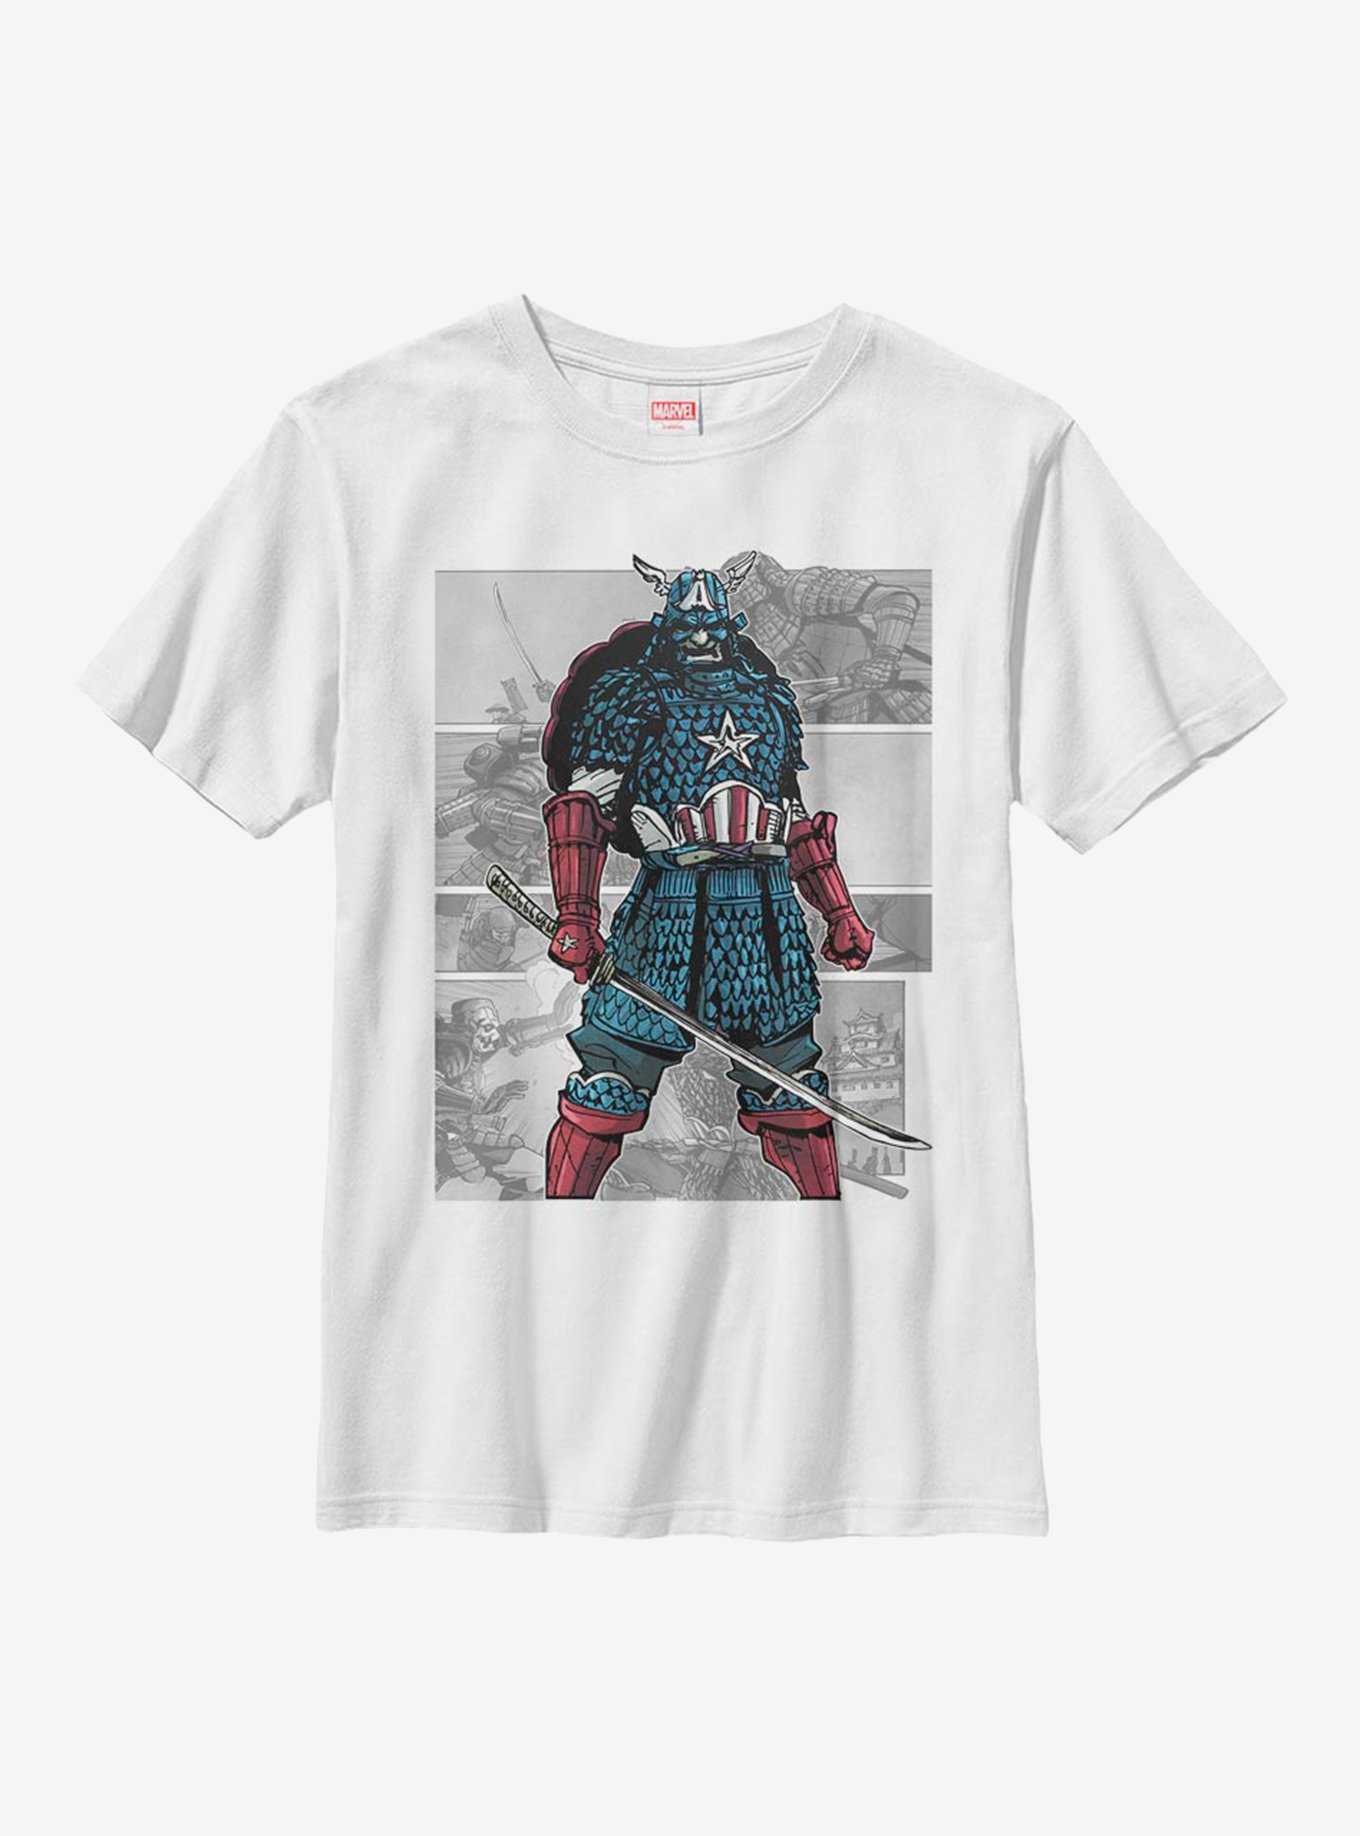 Marvel Captain America USA Samurai Youth T-Shirt, , hi-res